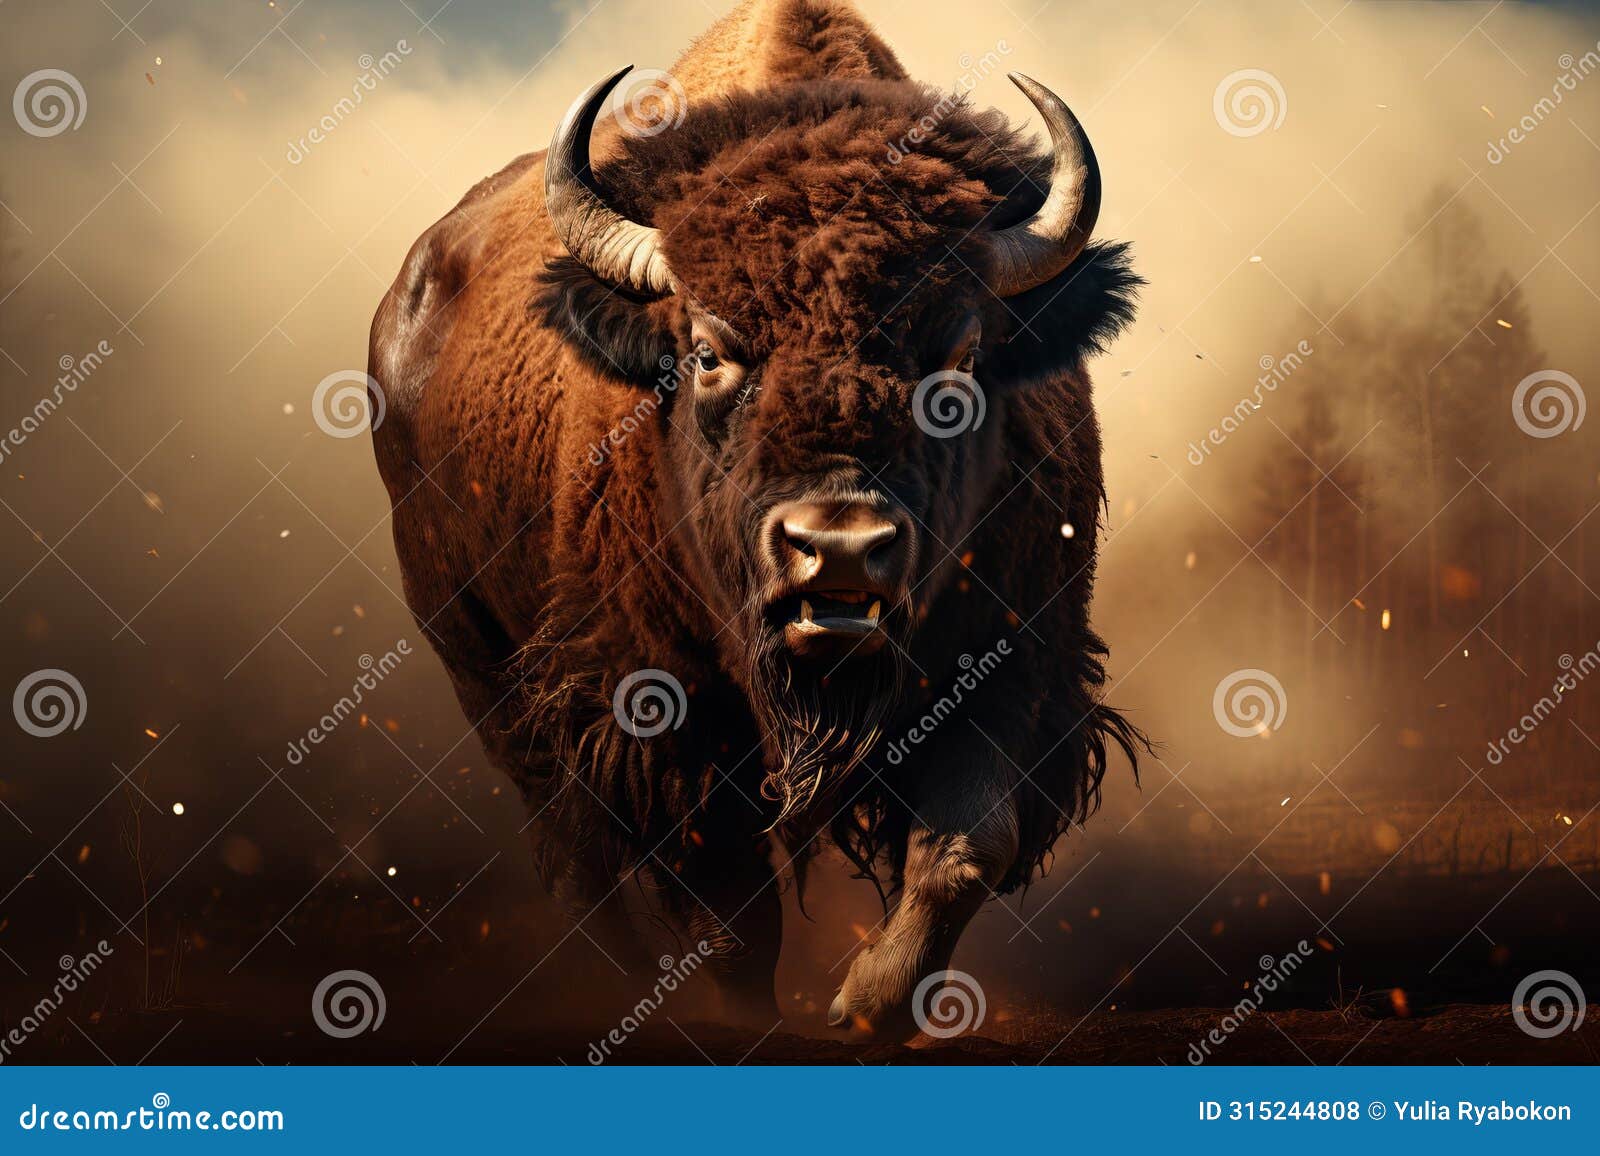 migratory american bison summer. generate ai